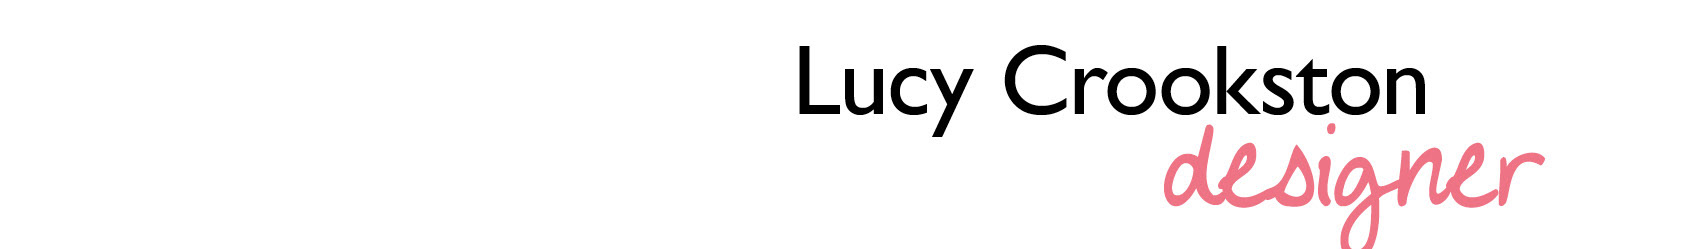 Lucy Crookston profil başlığı